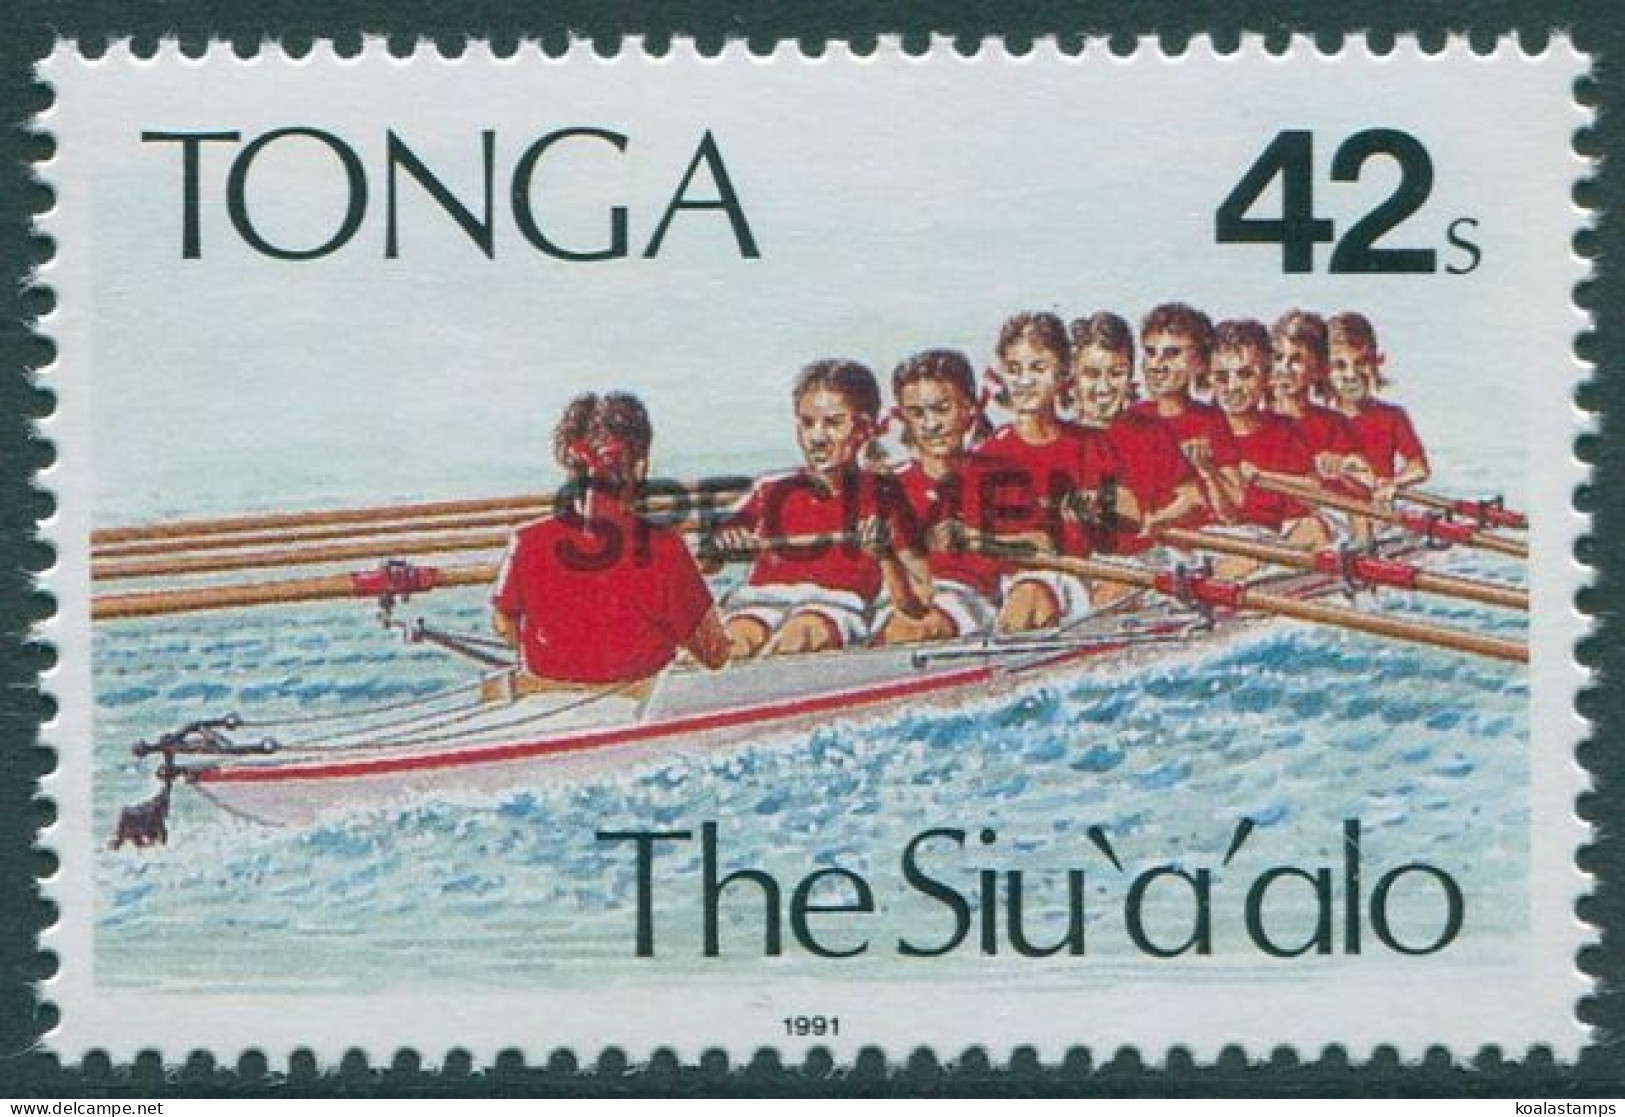 Tonga 1991 SG1148 42s Rowing SPECIMEN MNH - Tonga (1970-...)